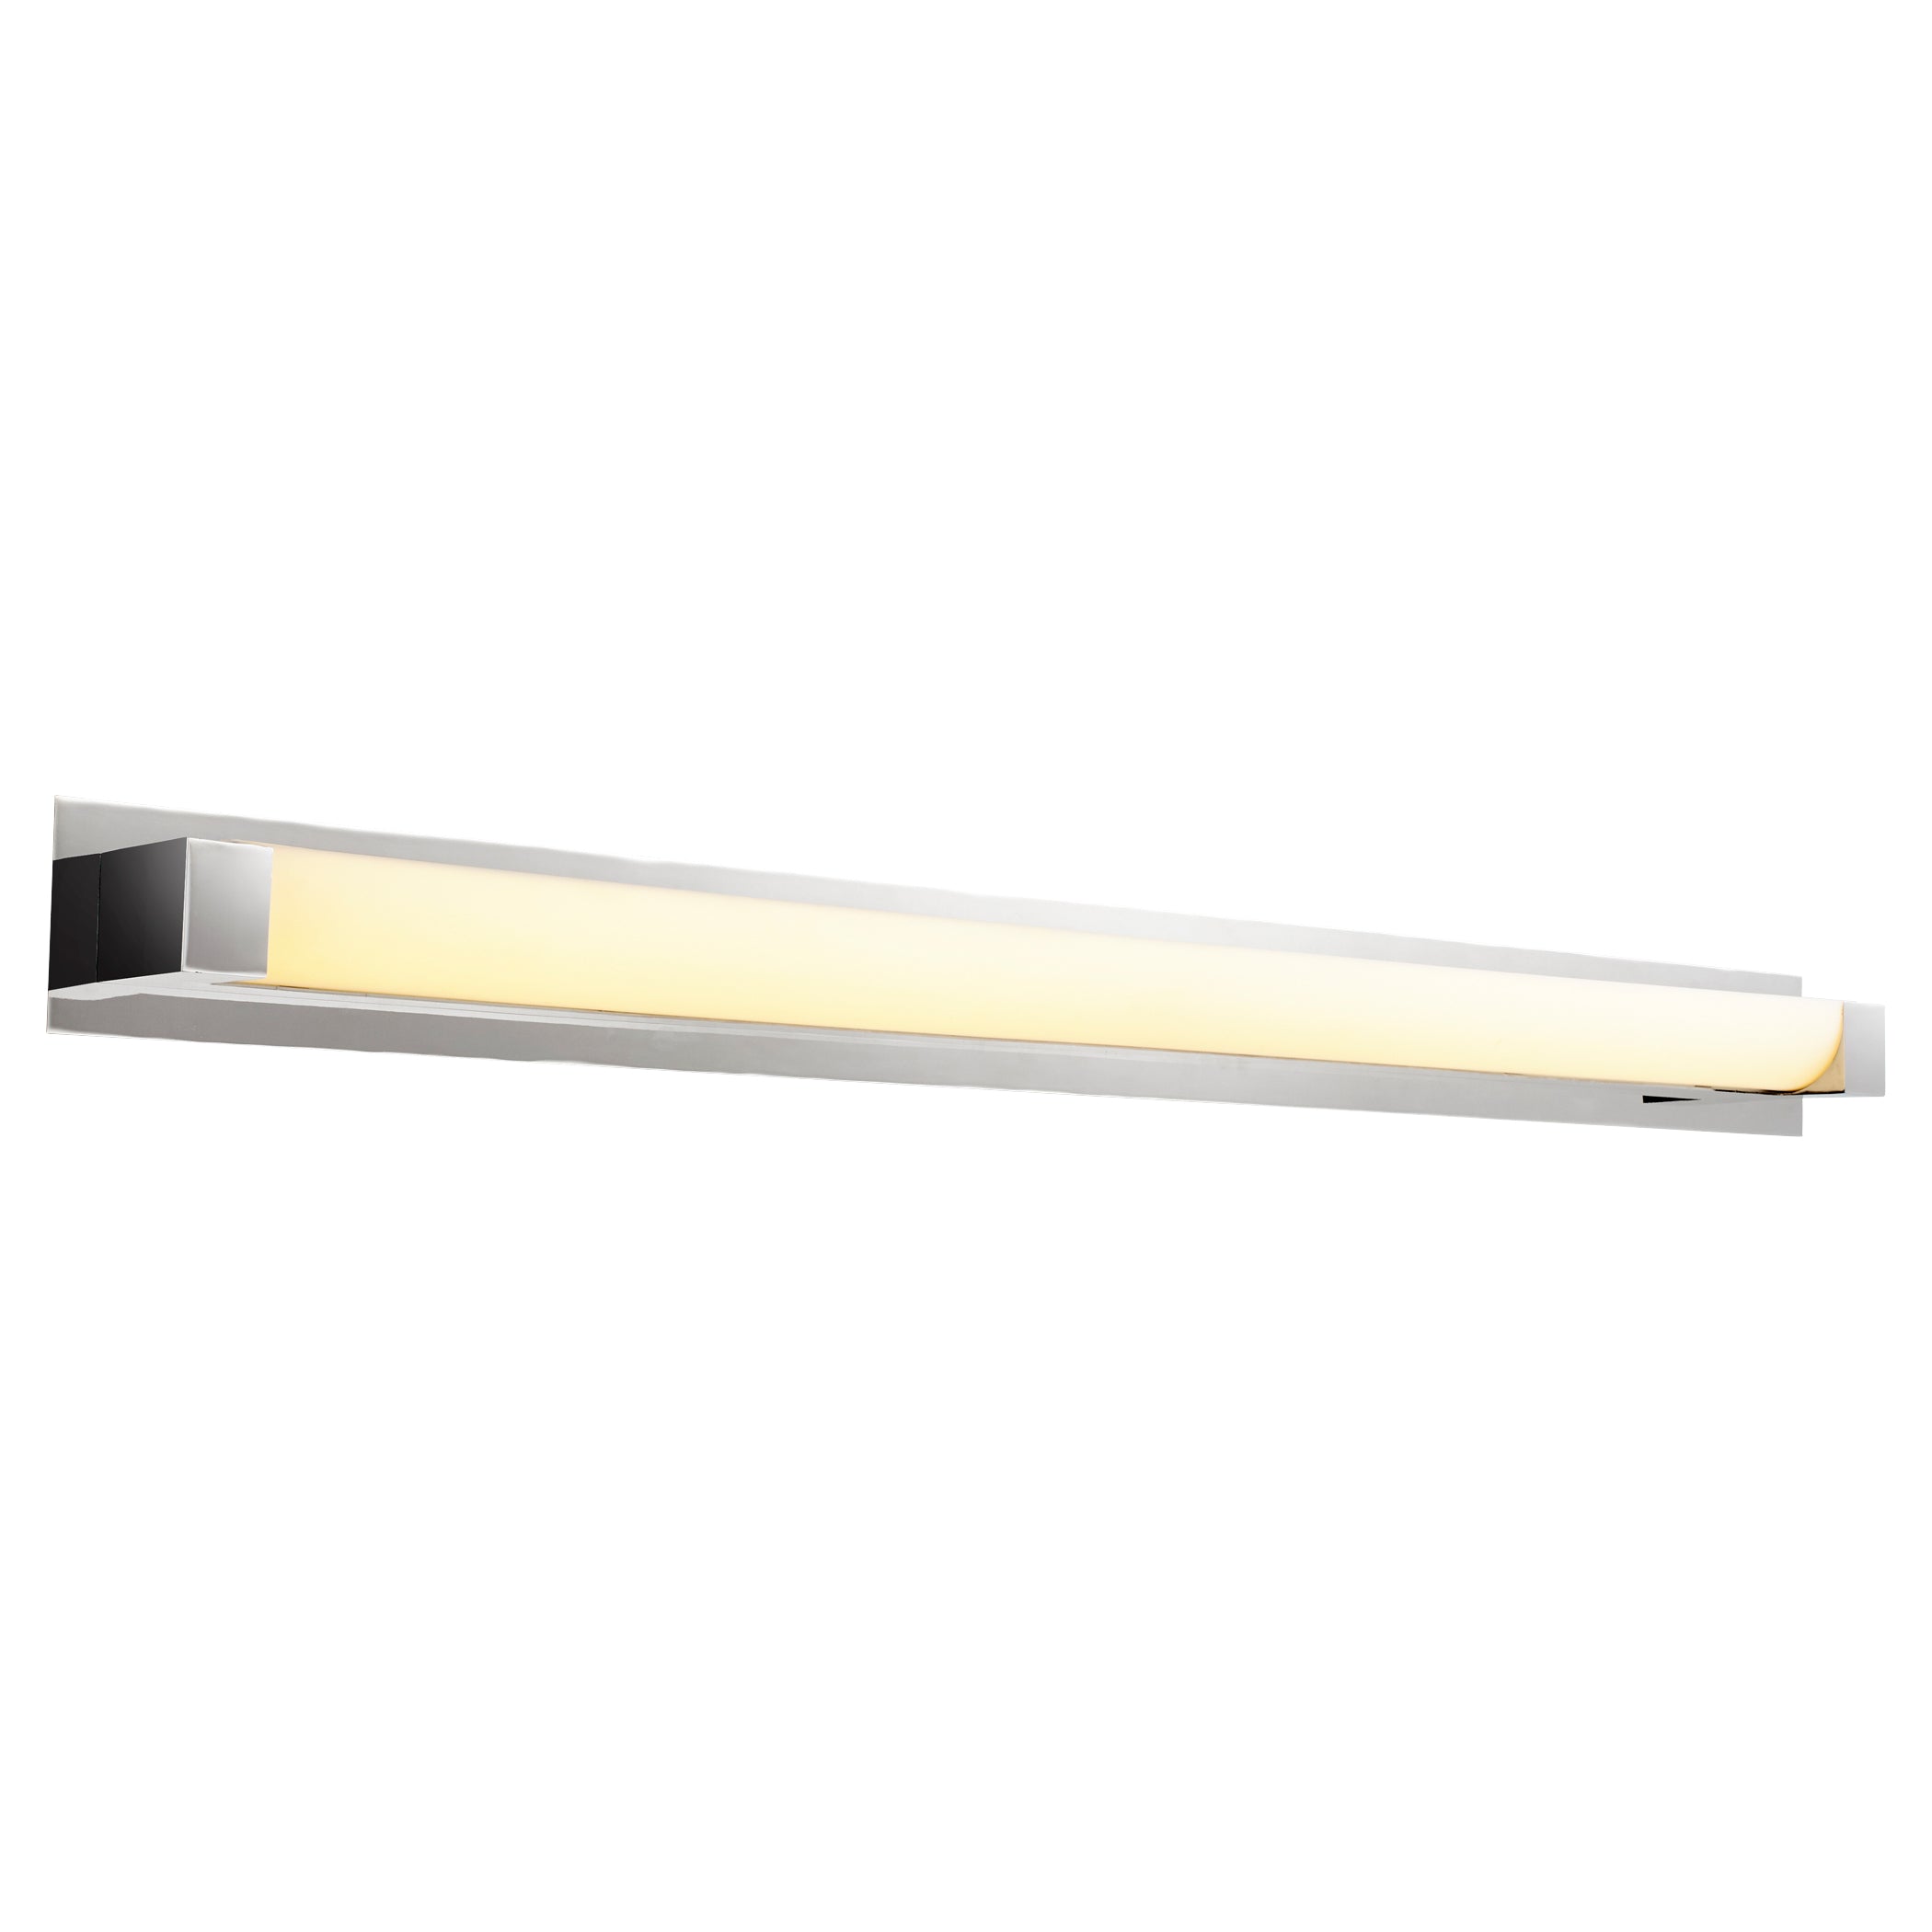 Oxygen Balance 3-549-20-BP420 Modern Vanity LED Light Fixture 53 Inch - Polished Nickel